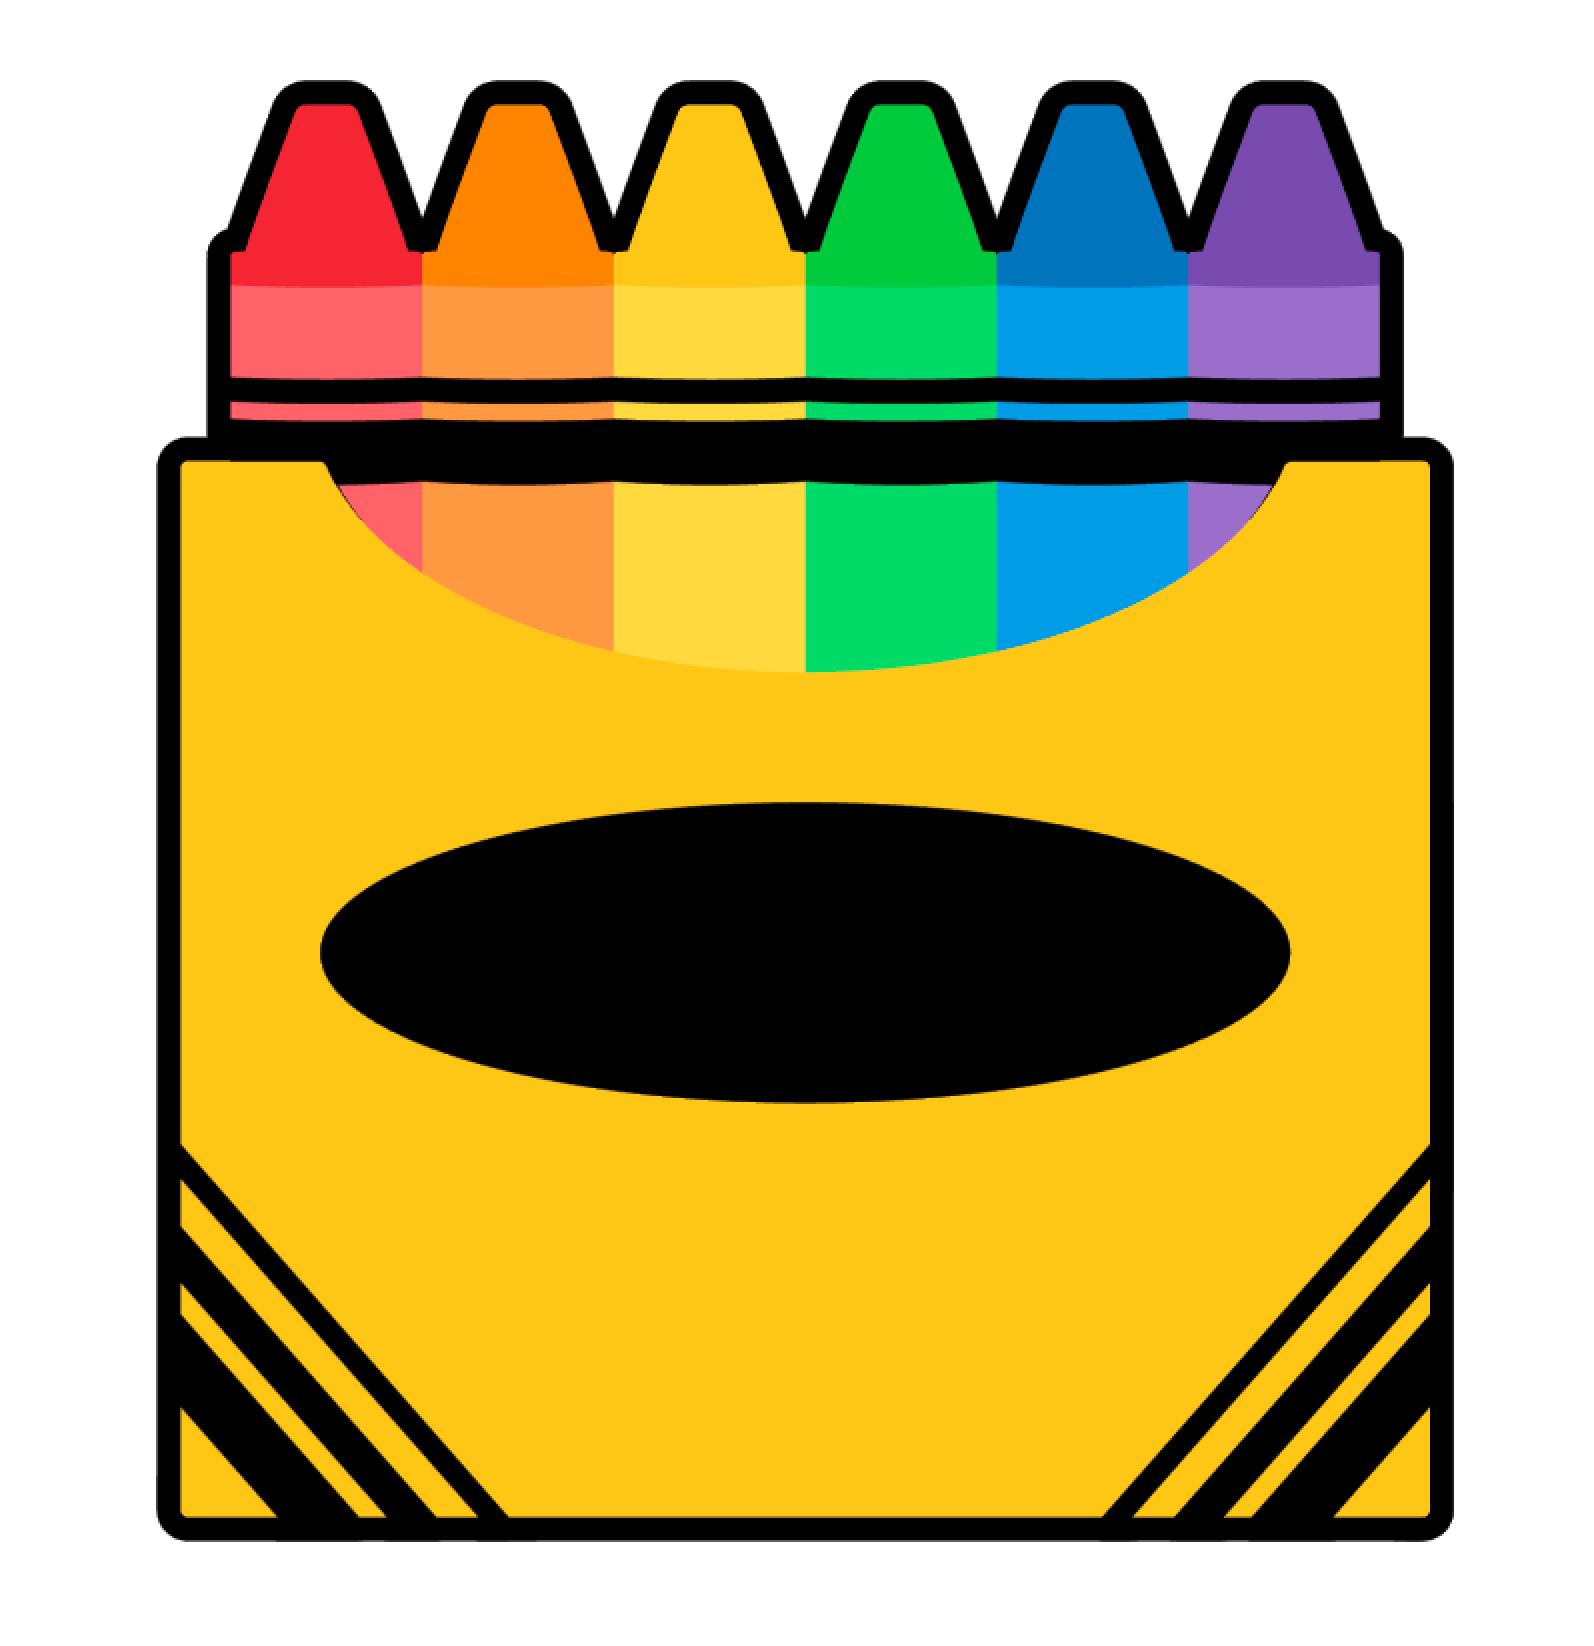 Crayon Box Sticker